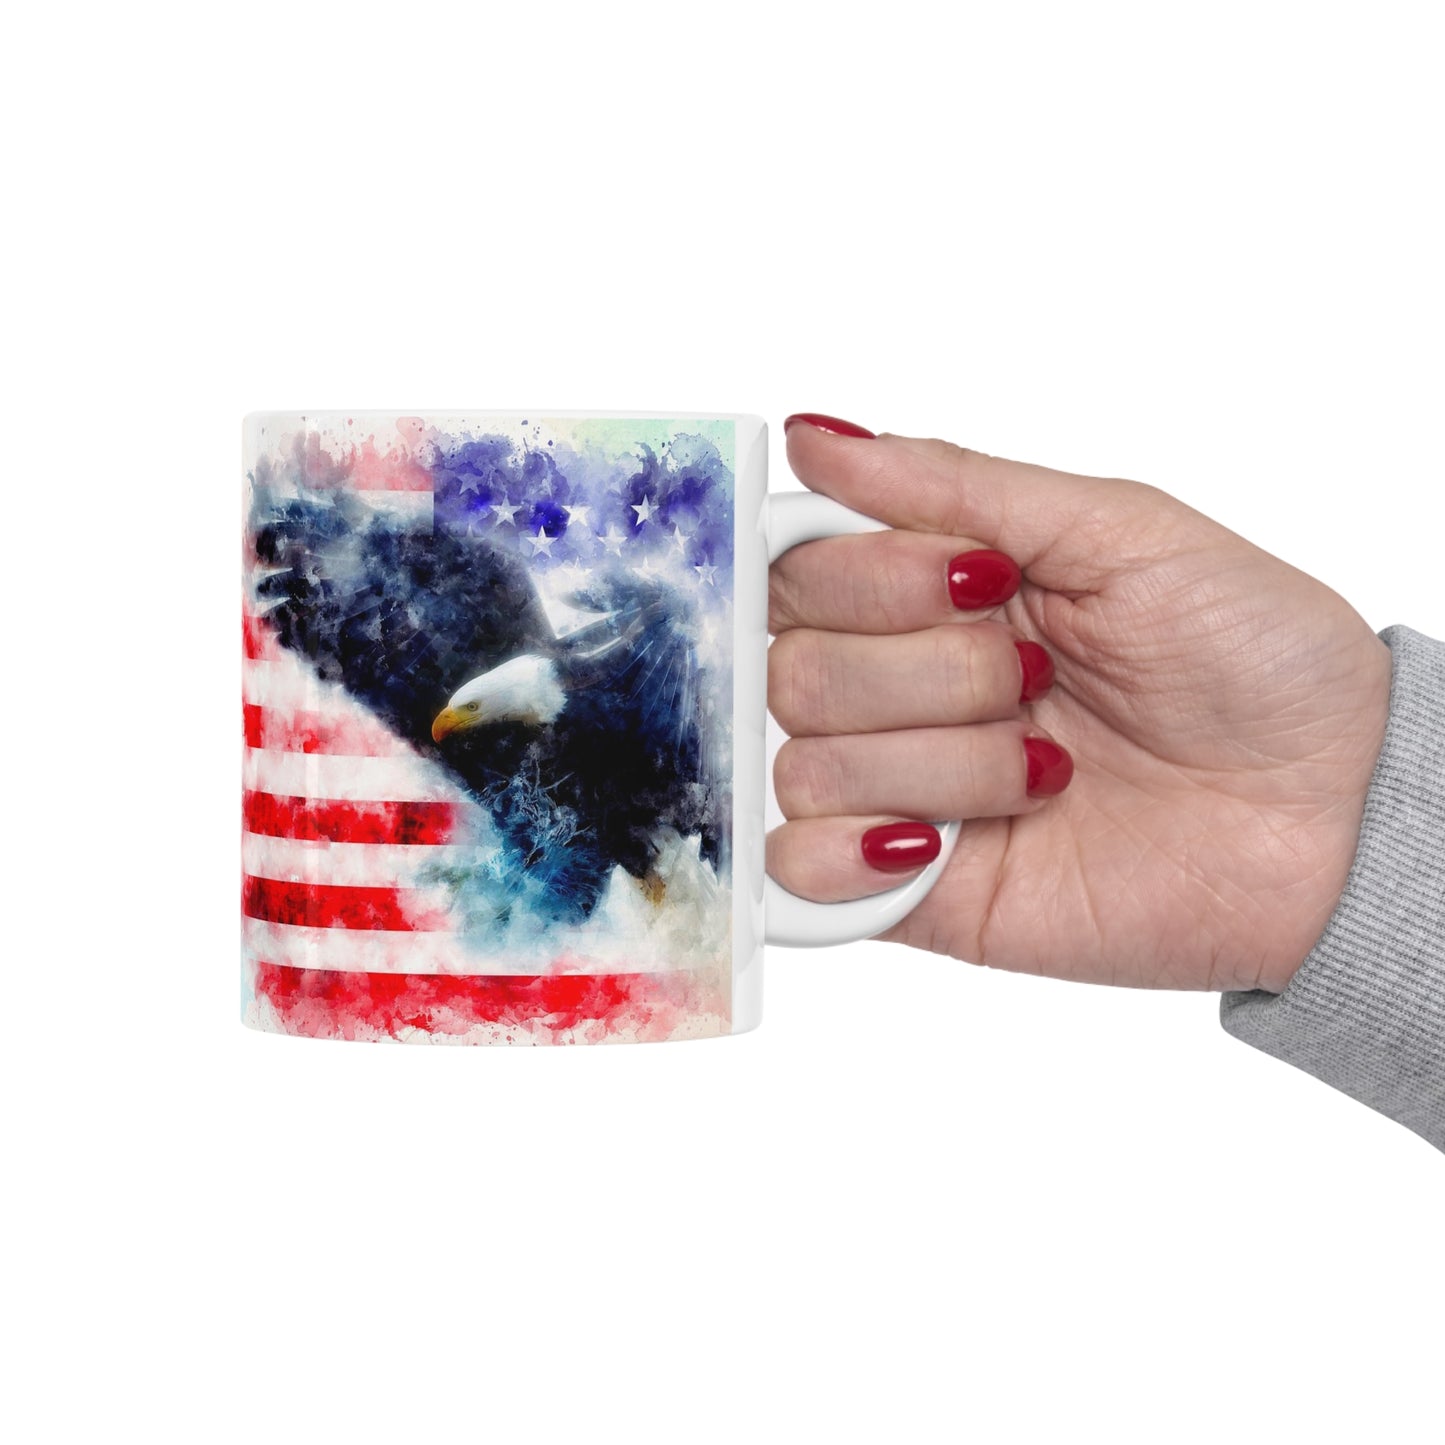 Double Eagle on Flag Coffee Mug